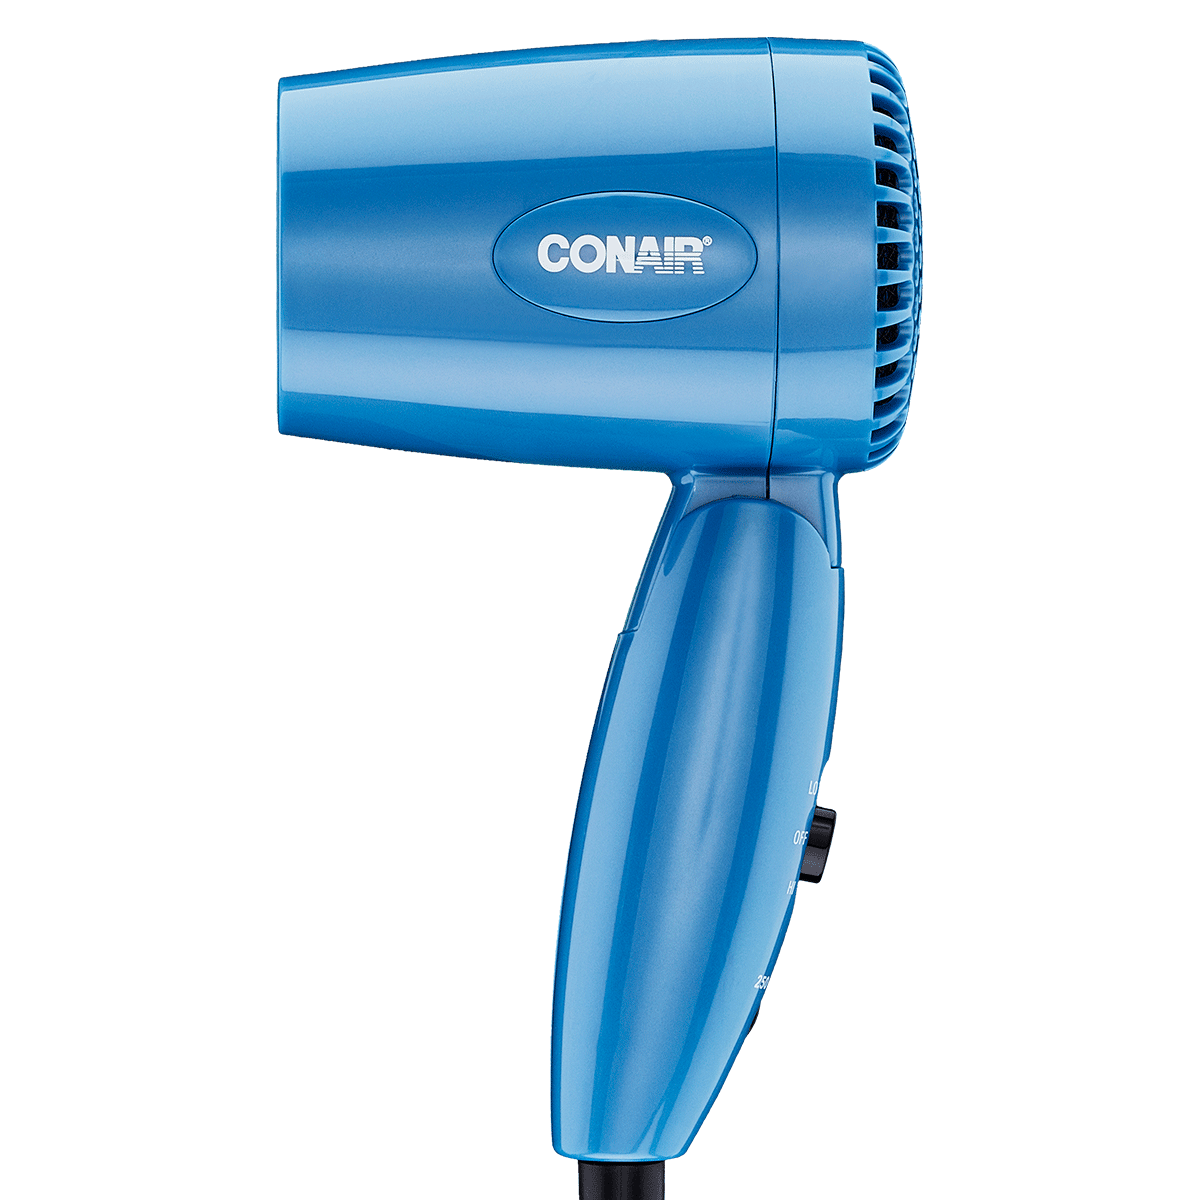 Conair 1600w Dual Volt Travel Folding Hair Dryer 110/220 Volt for Worldwide Use